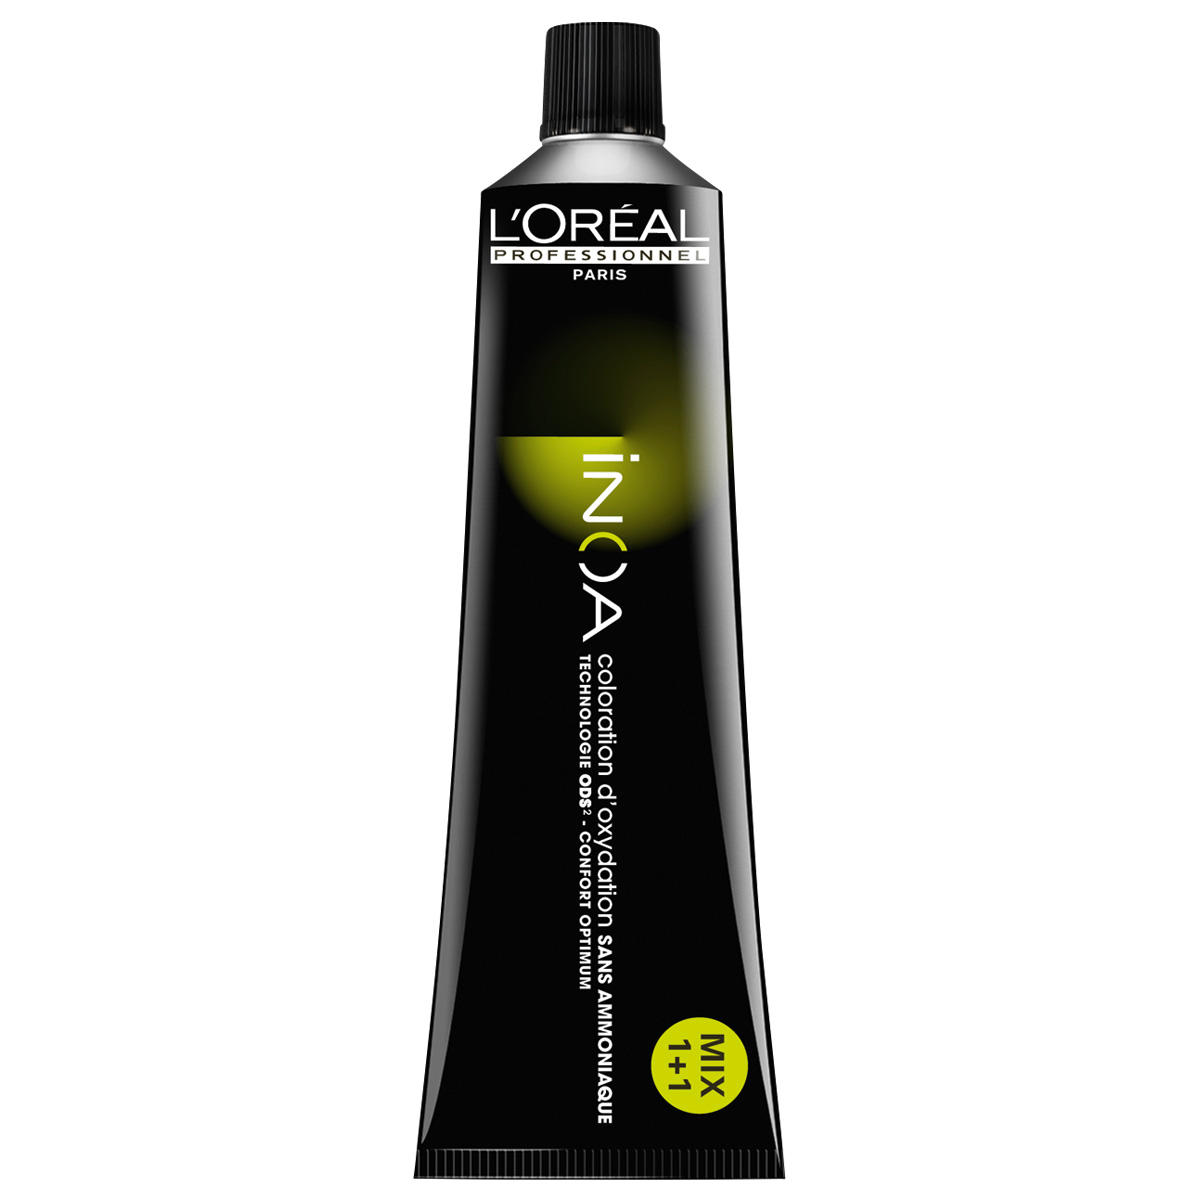 L'Oréal Professionnel Paris Coloration 6 Biondo scuro, tubo 60 ml